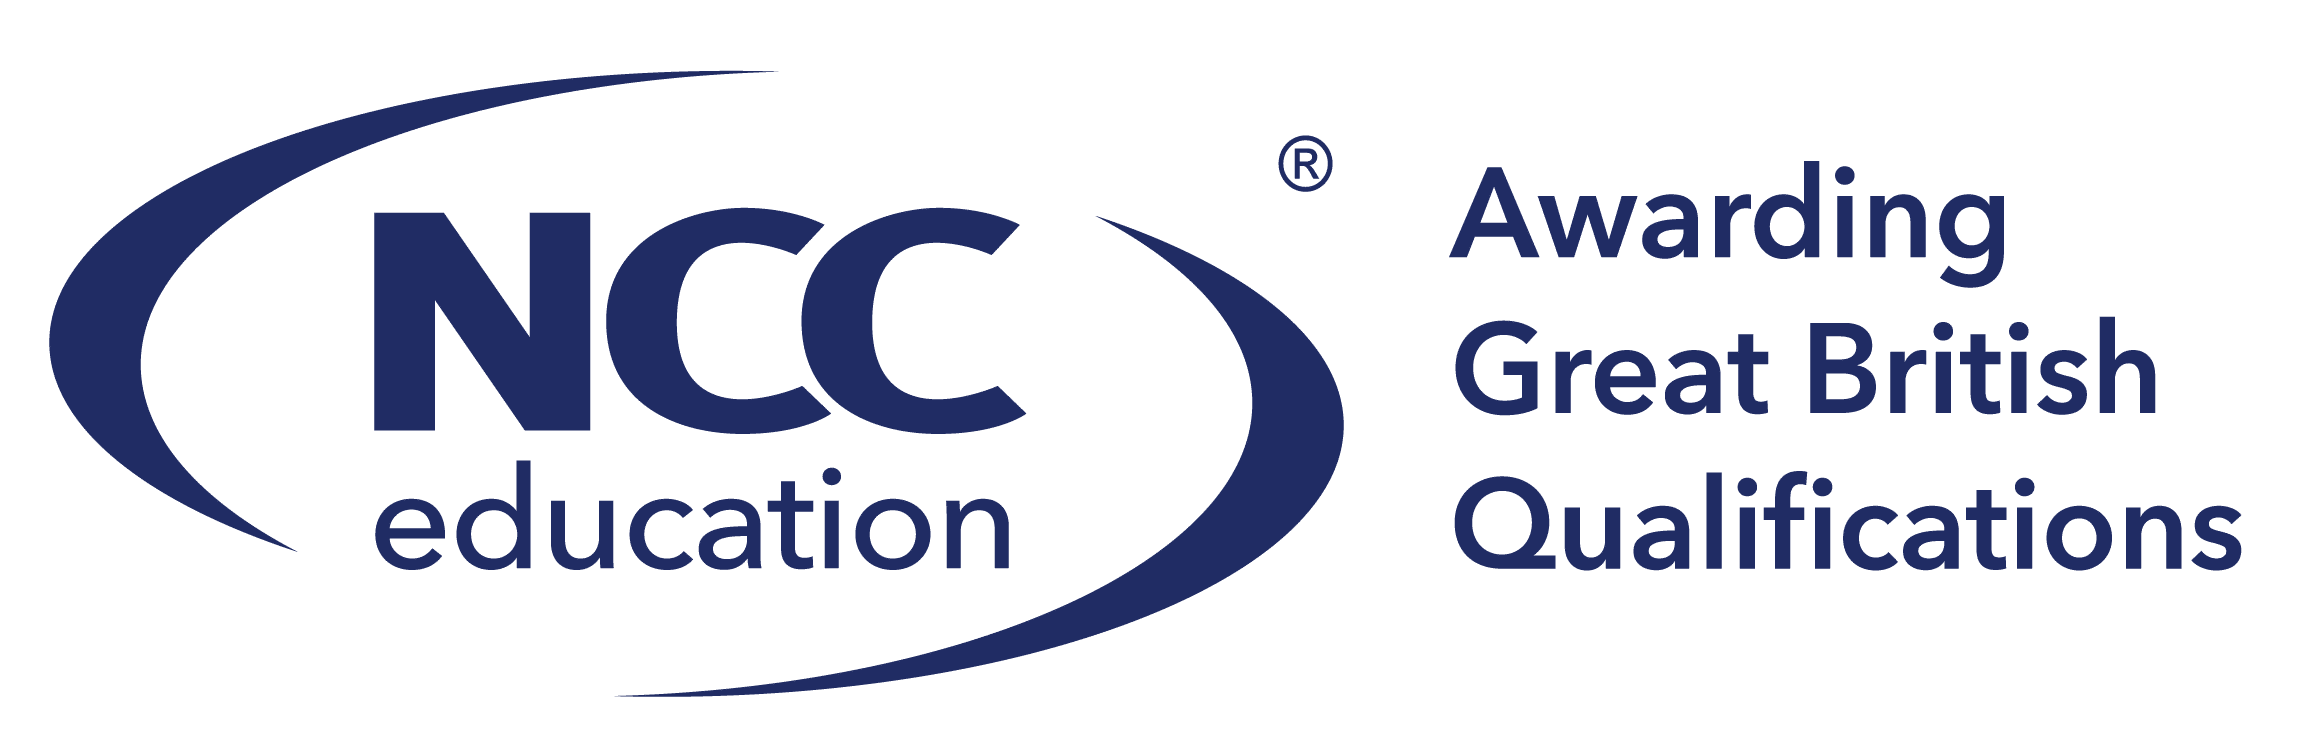 NCC education logo